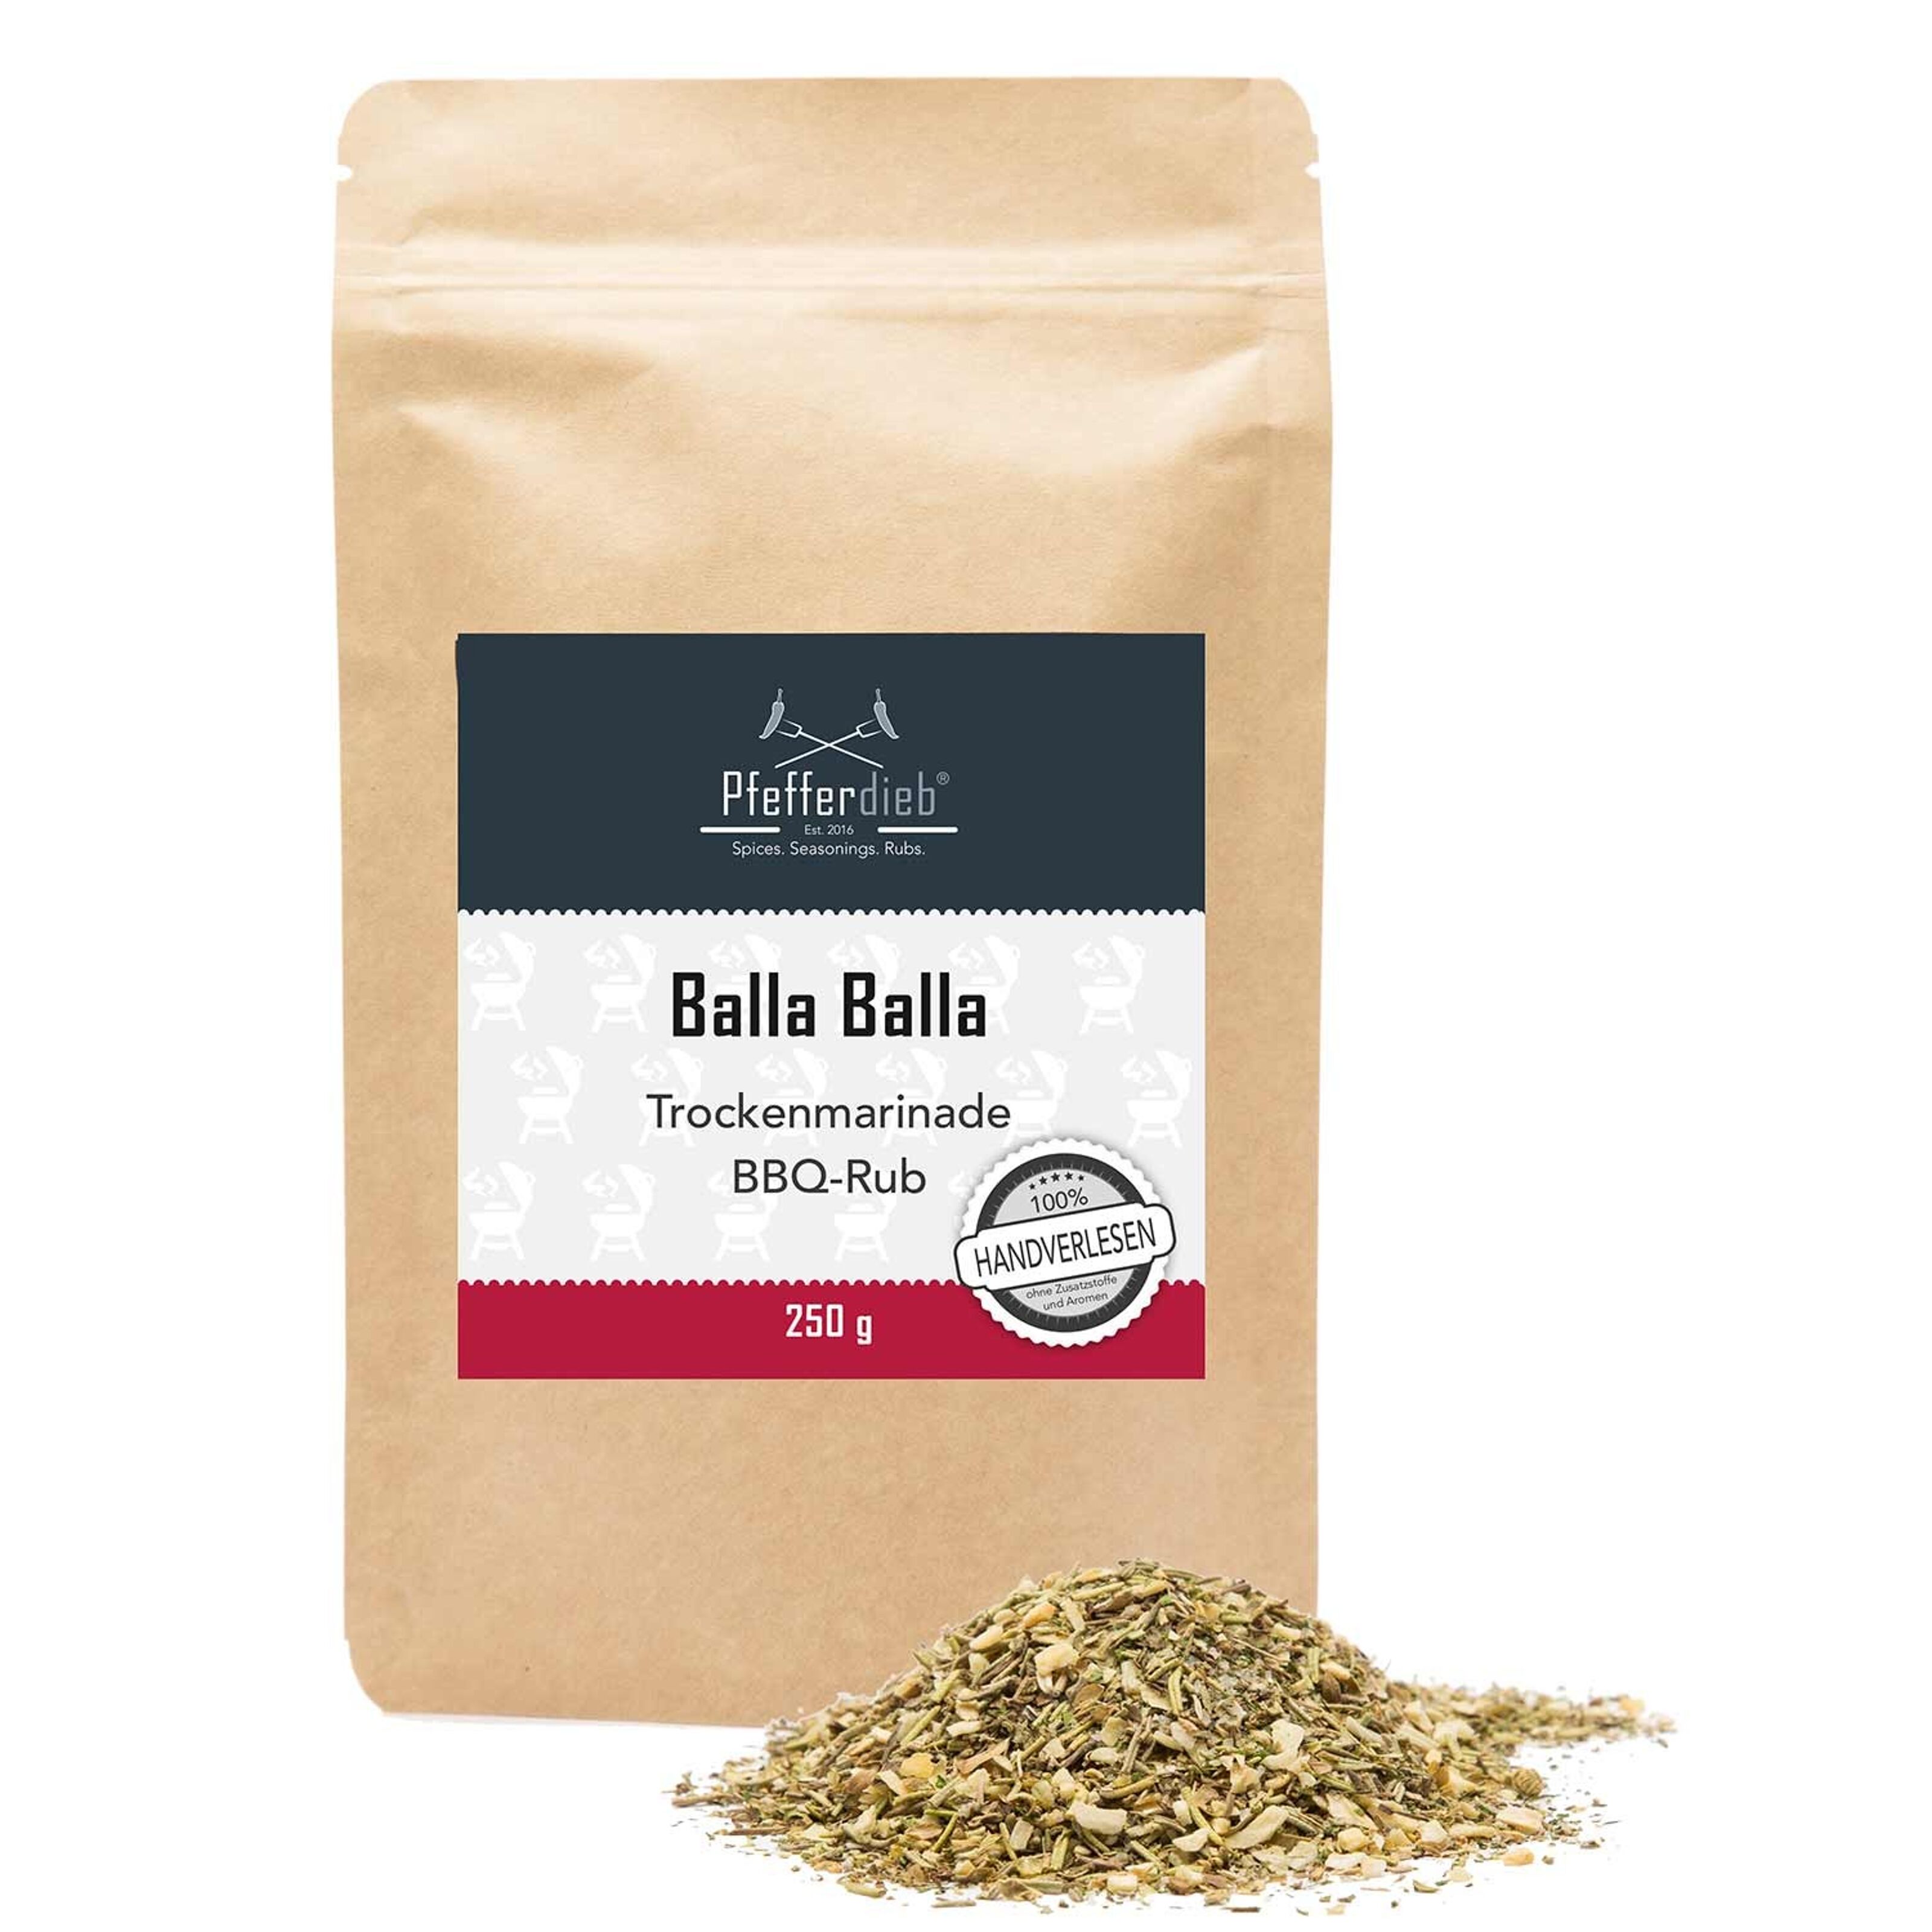 Balla Pfefferdieb Buy 250g marinade, - Balla dry spice, - rub wholesale premium Mediterranean, BBQ grill